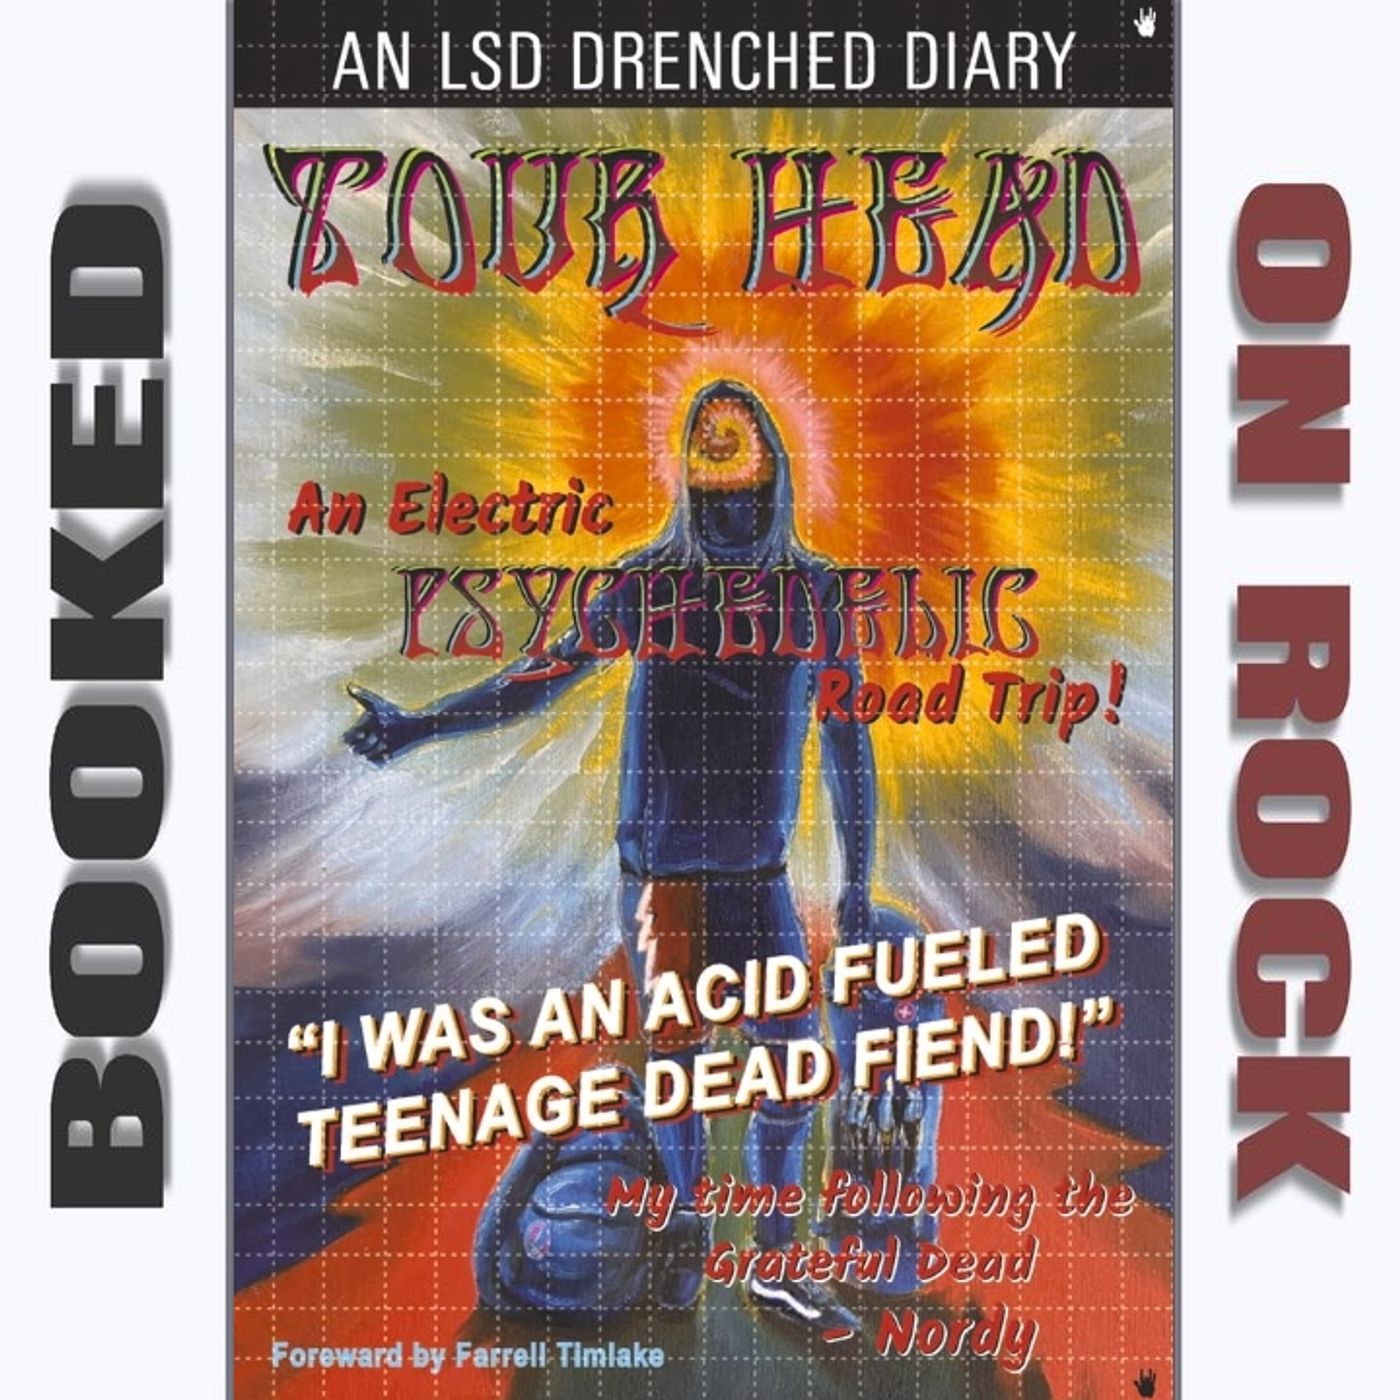 ”I Was An Acid-Fueled Teenage Dead Fiend!” [Episode 190]